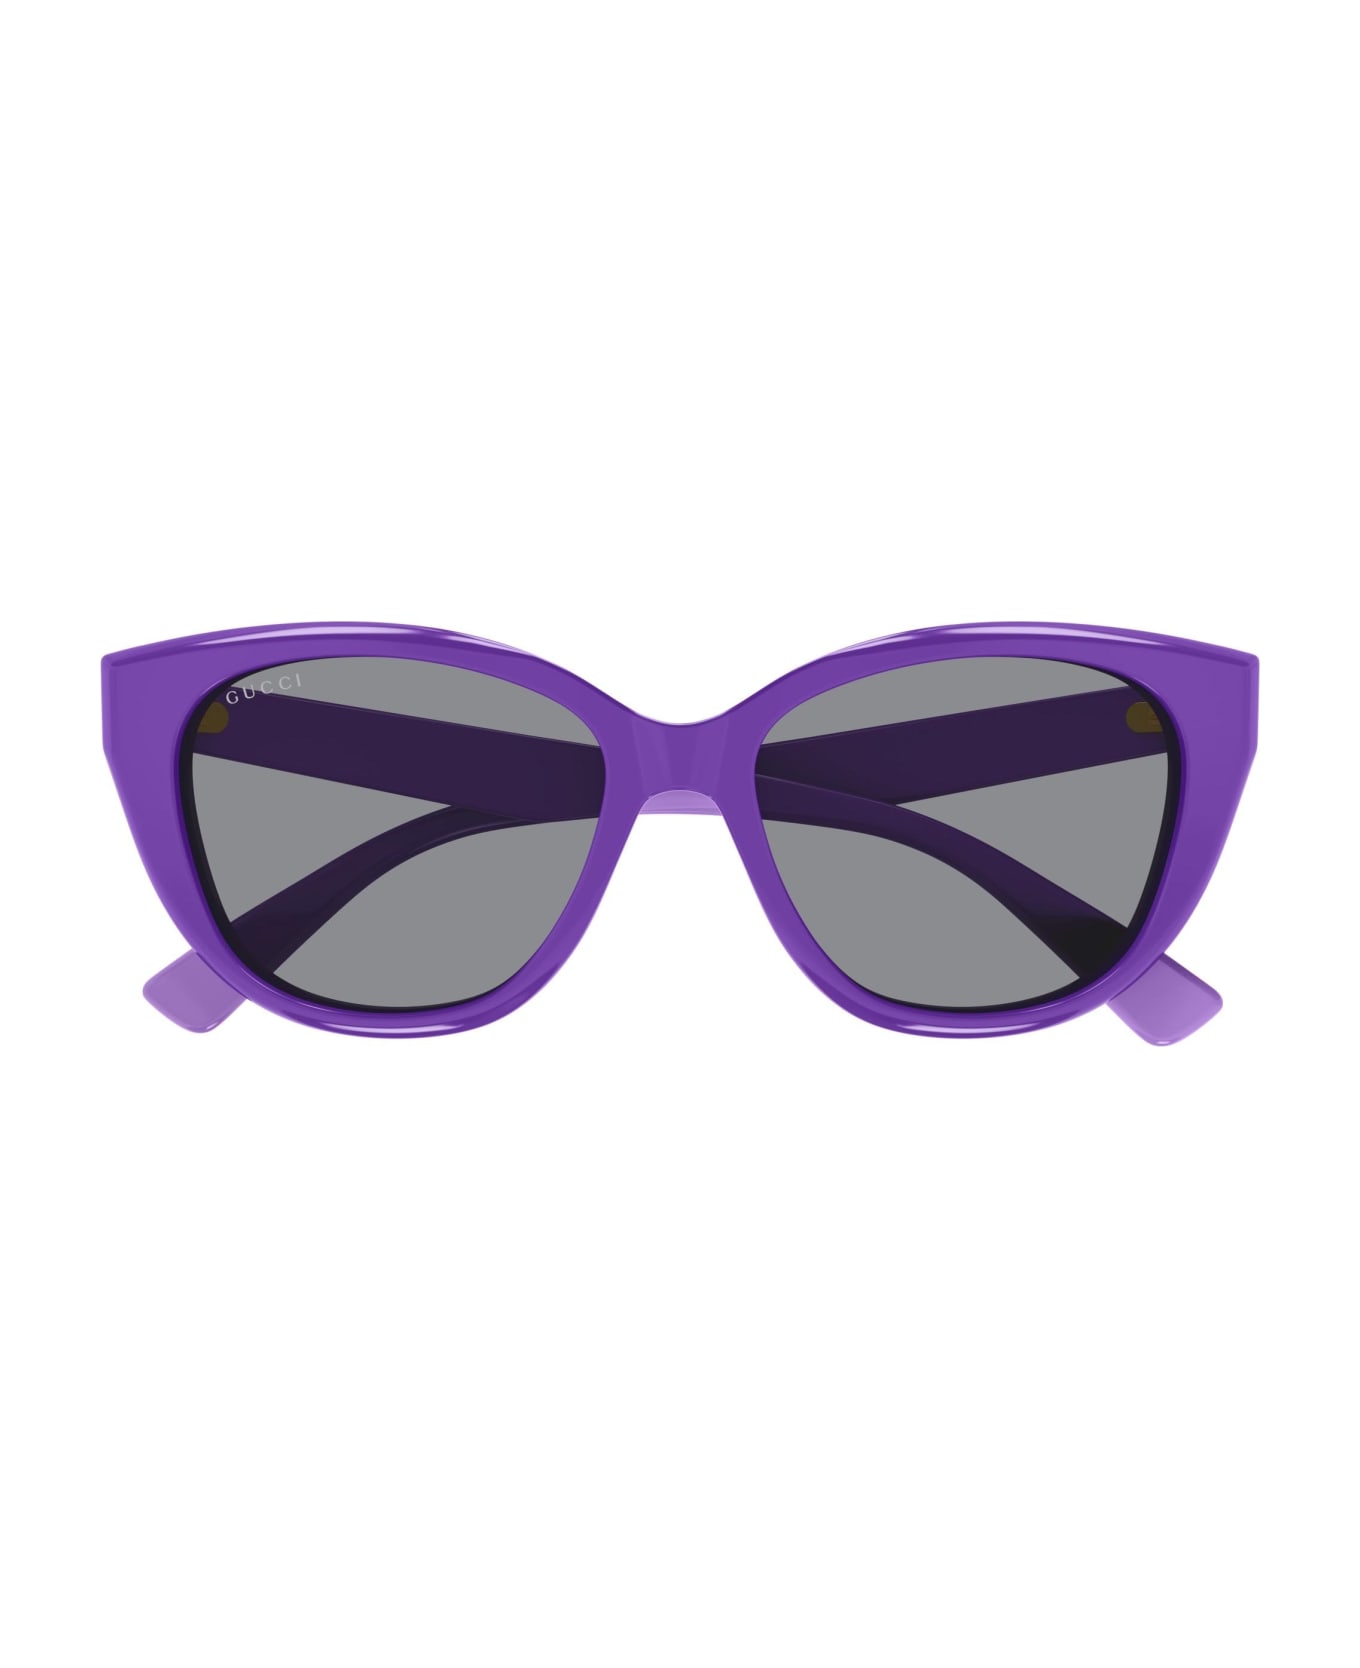 Gucci Eyewear Sunglasses - Viola/Grigio